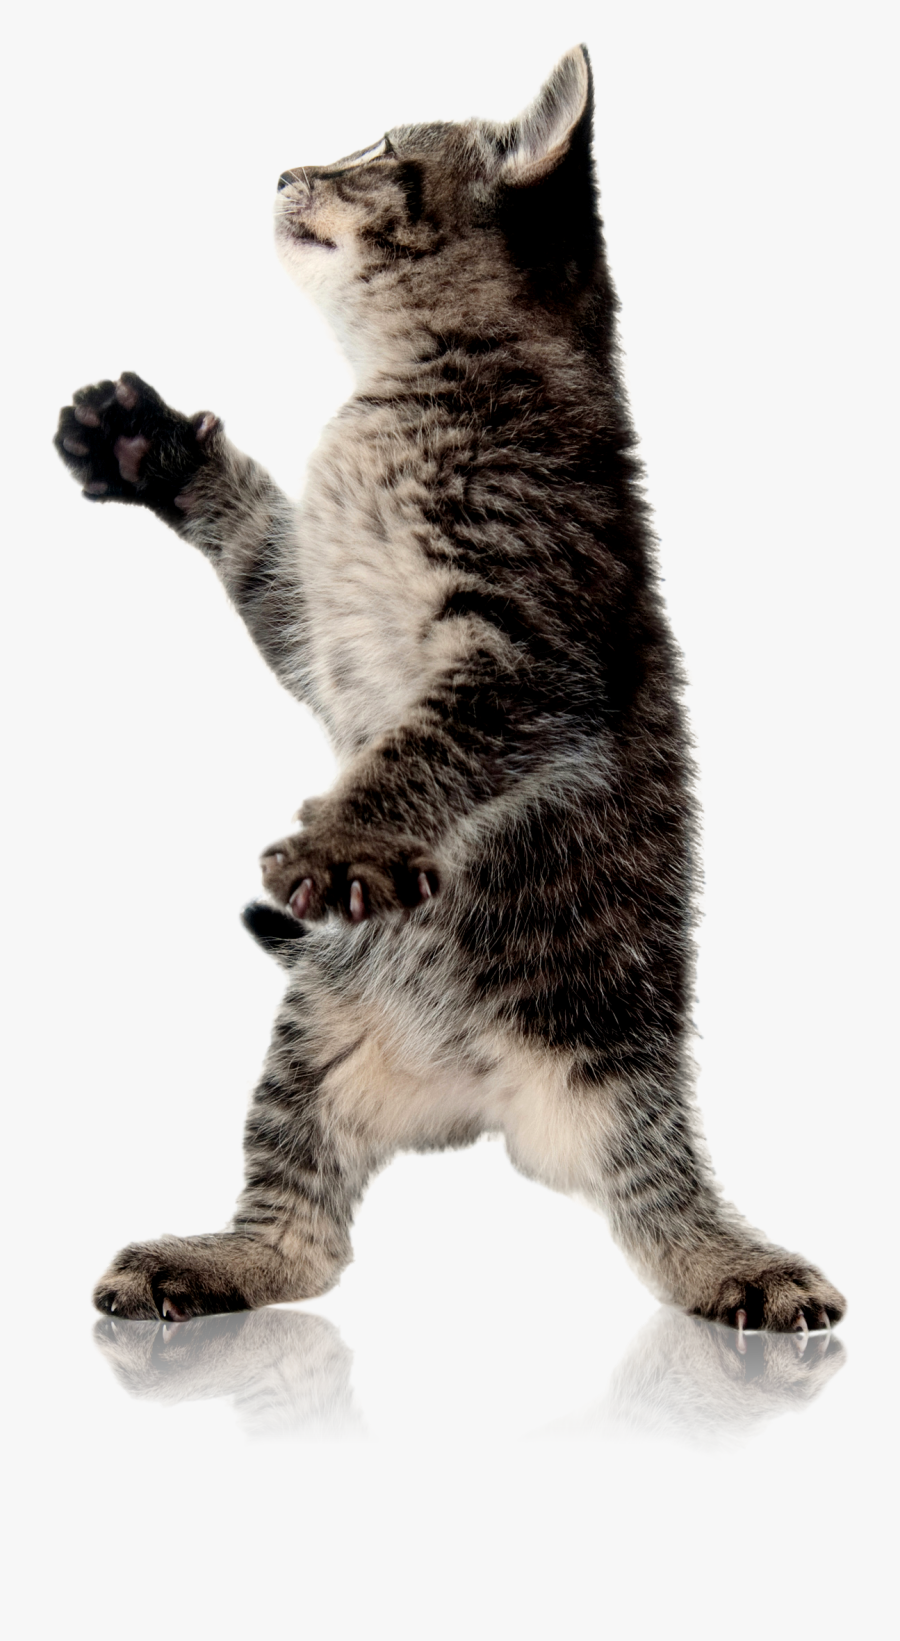 Cat Standing Up Transparent Background - Cat With Paw Up Transparent Background, Transparent Clipart